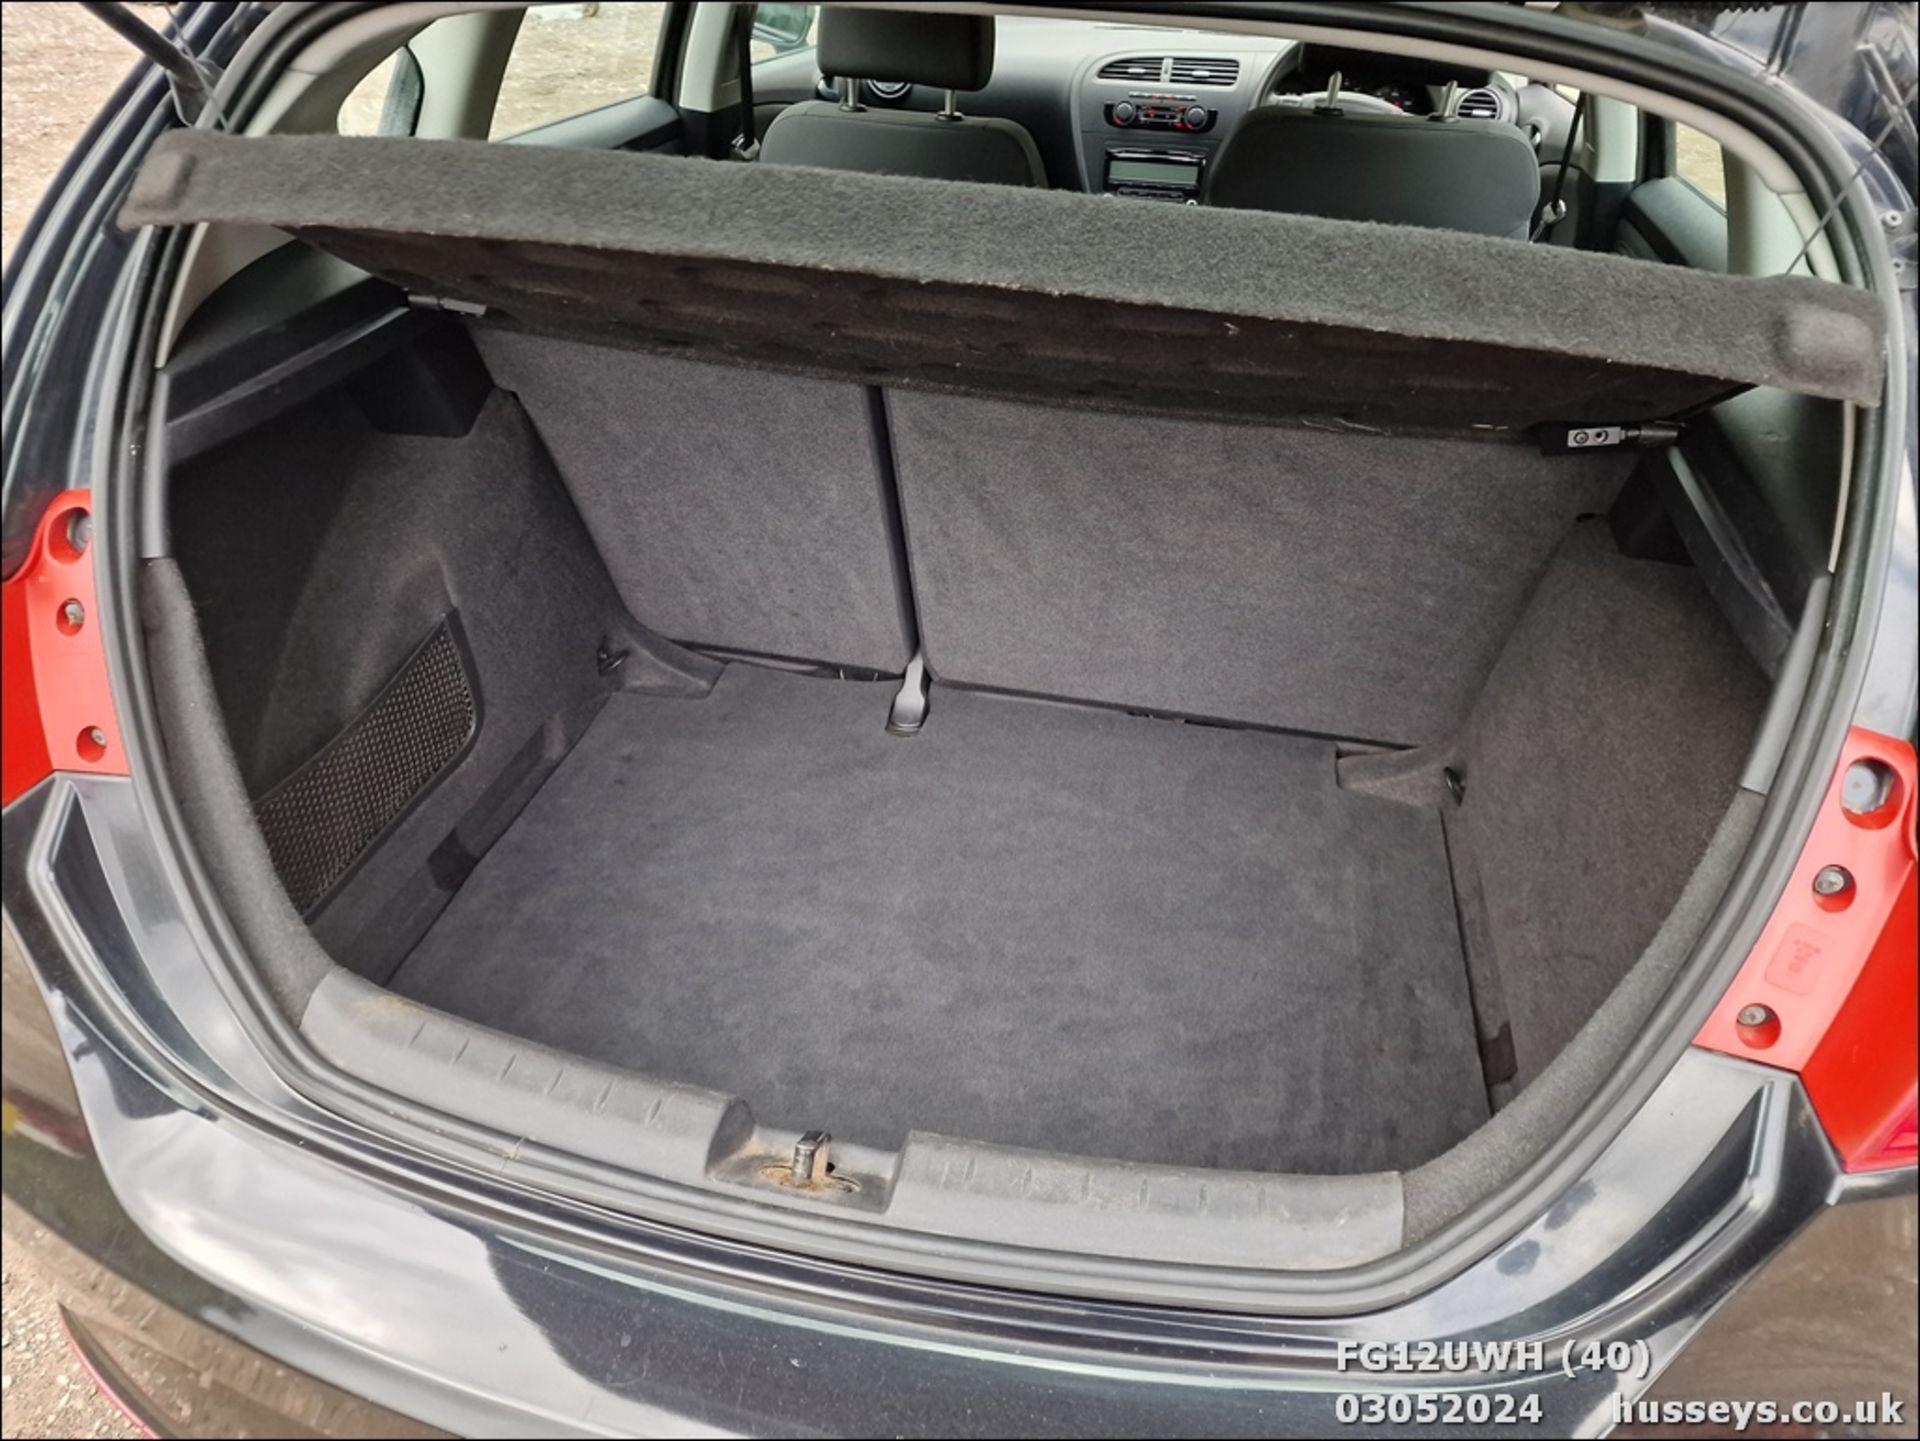 12/12 SEAT LEON S COPA CR TDI ECOMOT - 1598cc 5dr Hatchback (Black, 123k) - Image 41 of 45